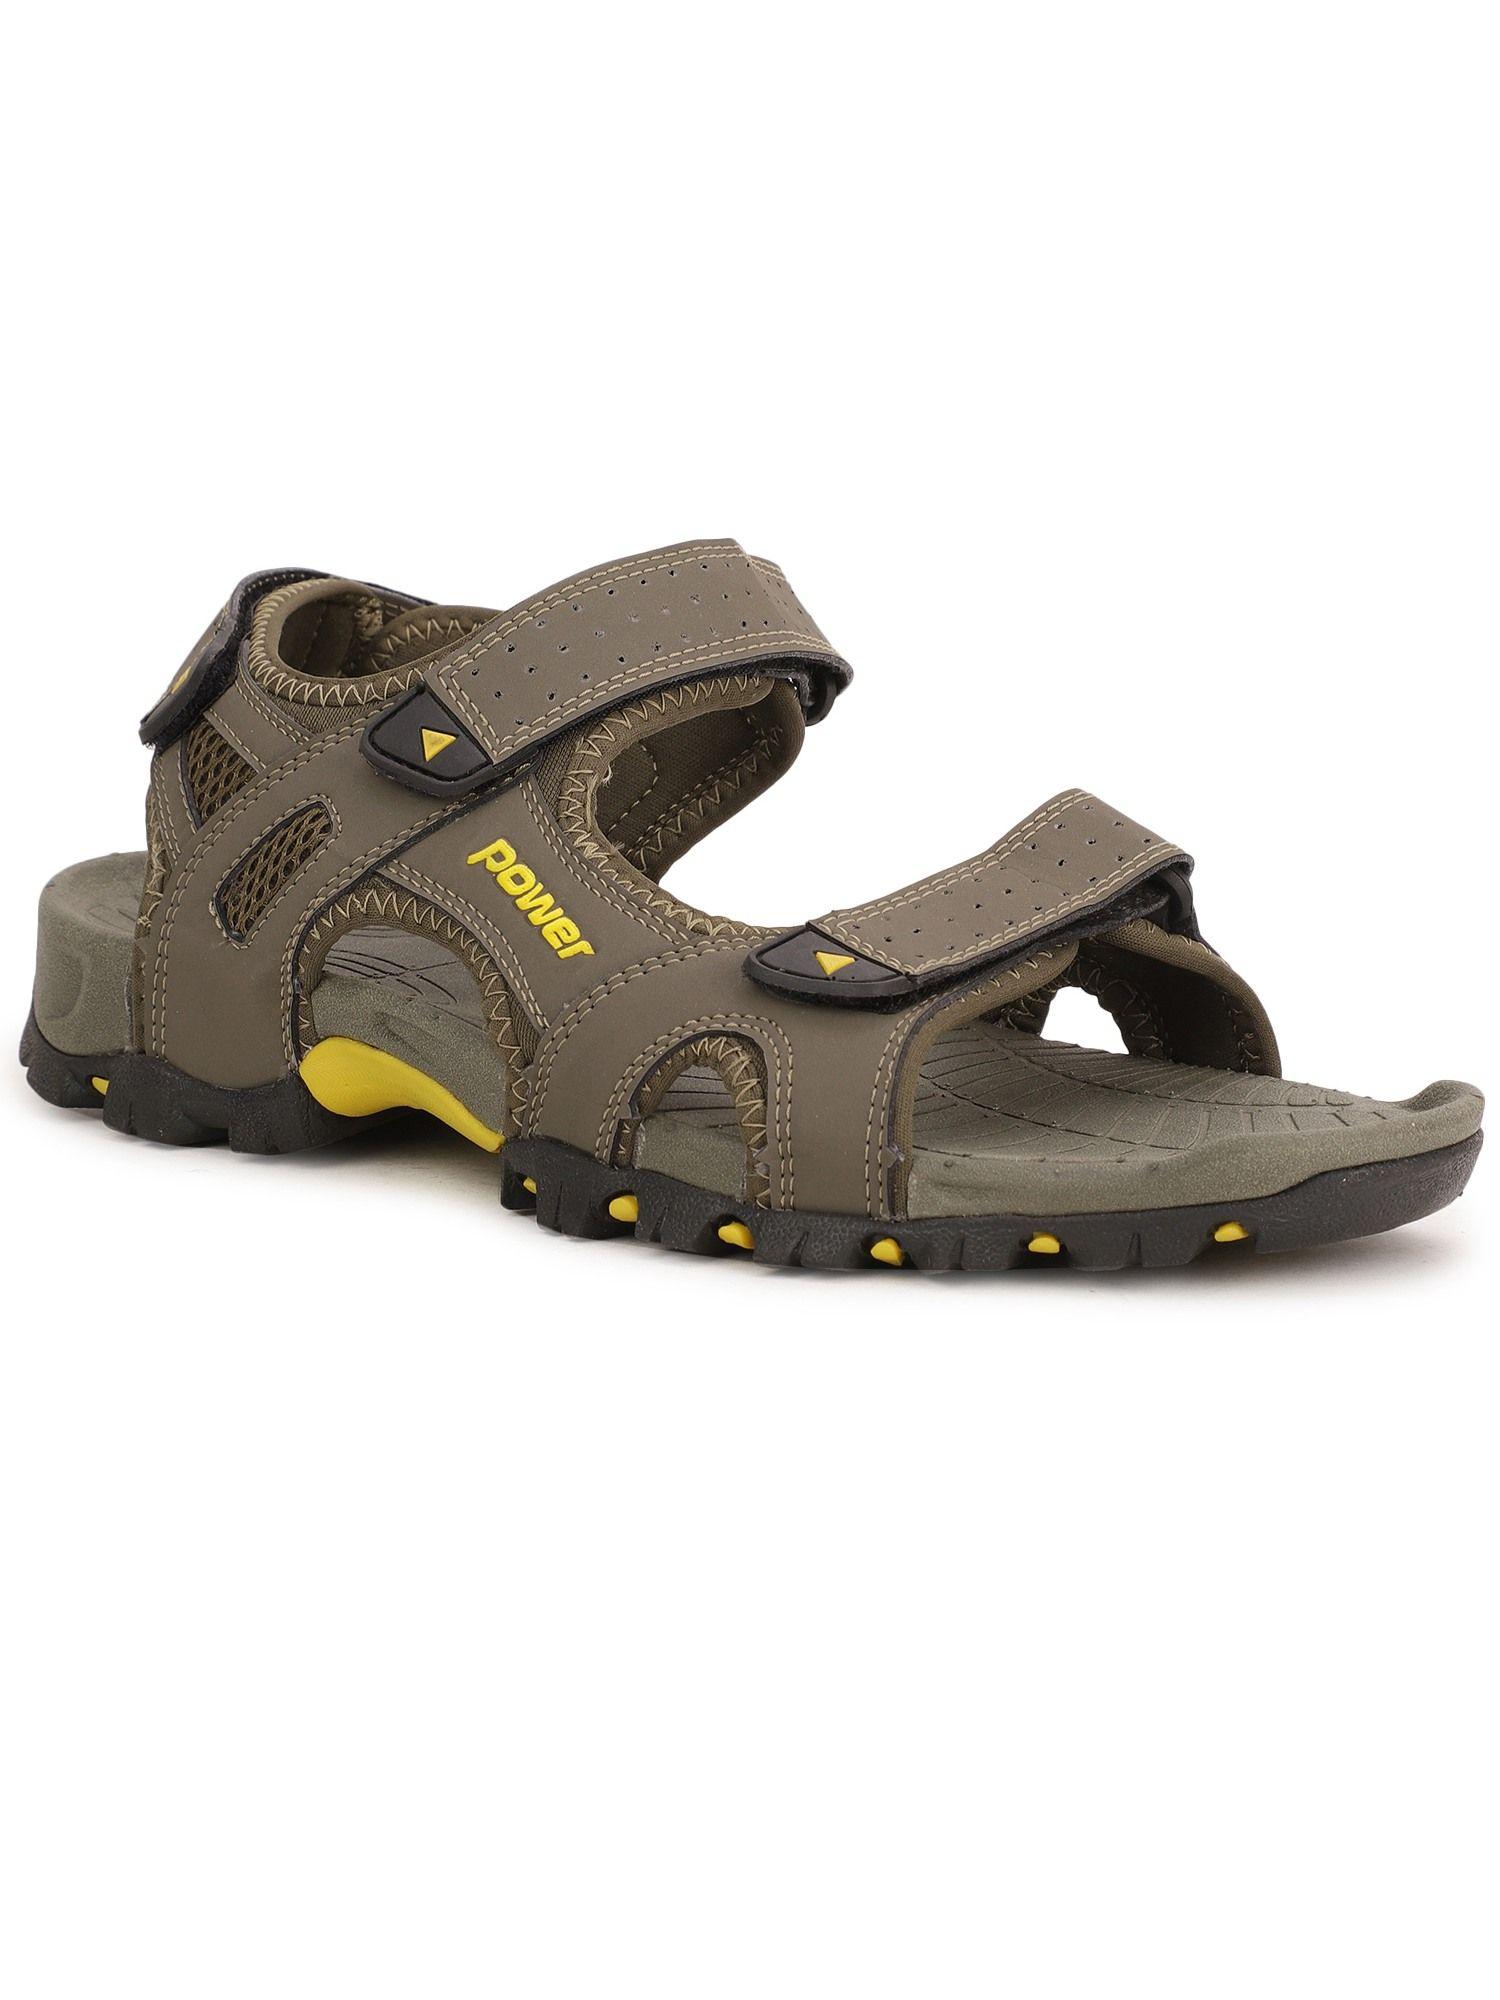 grey sports sandals for men